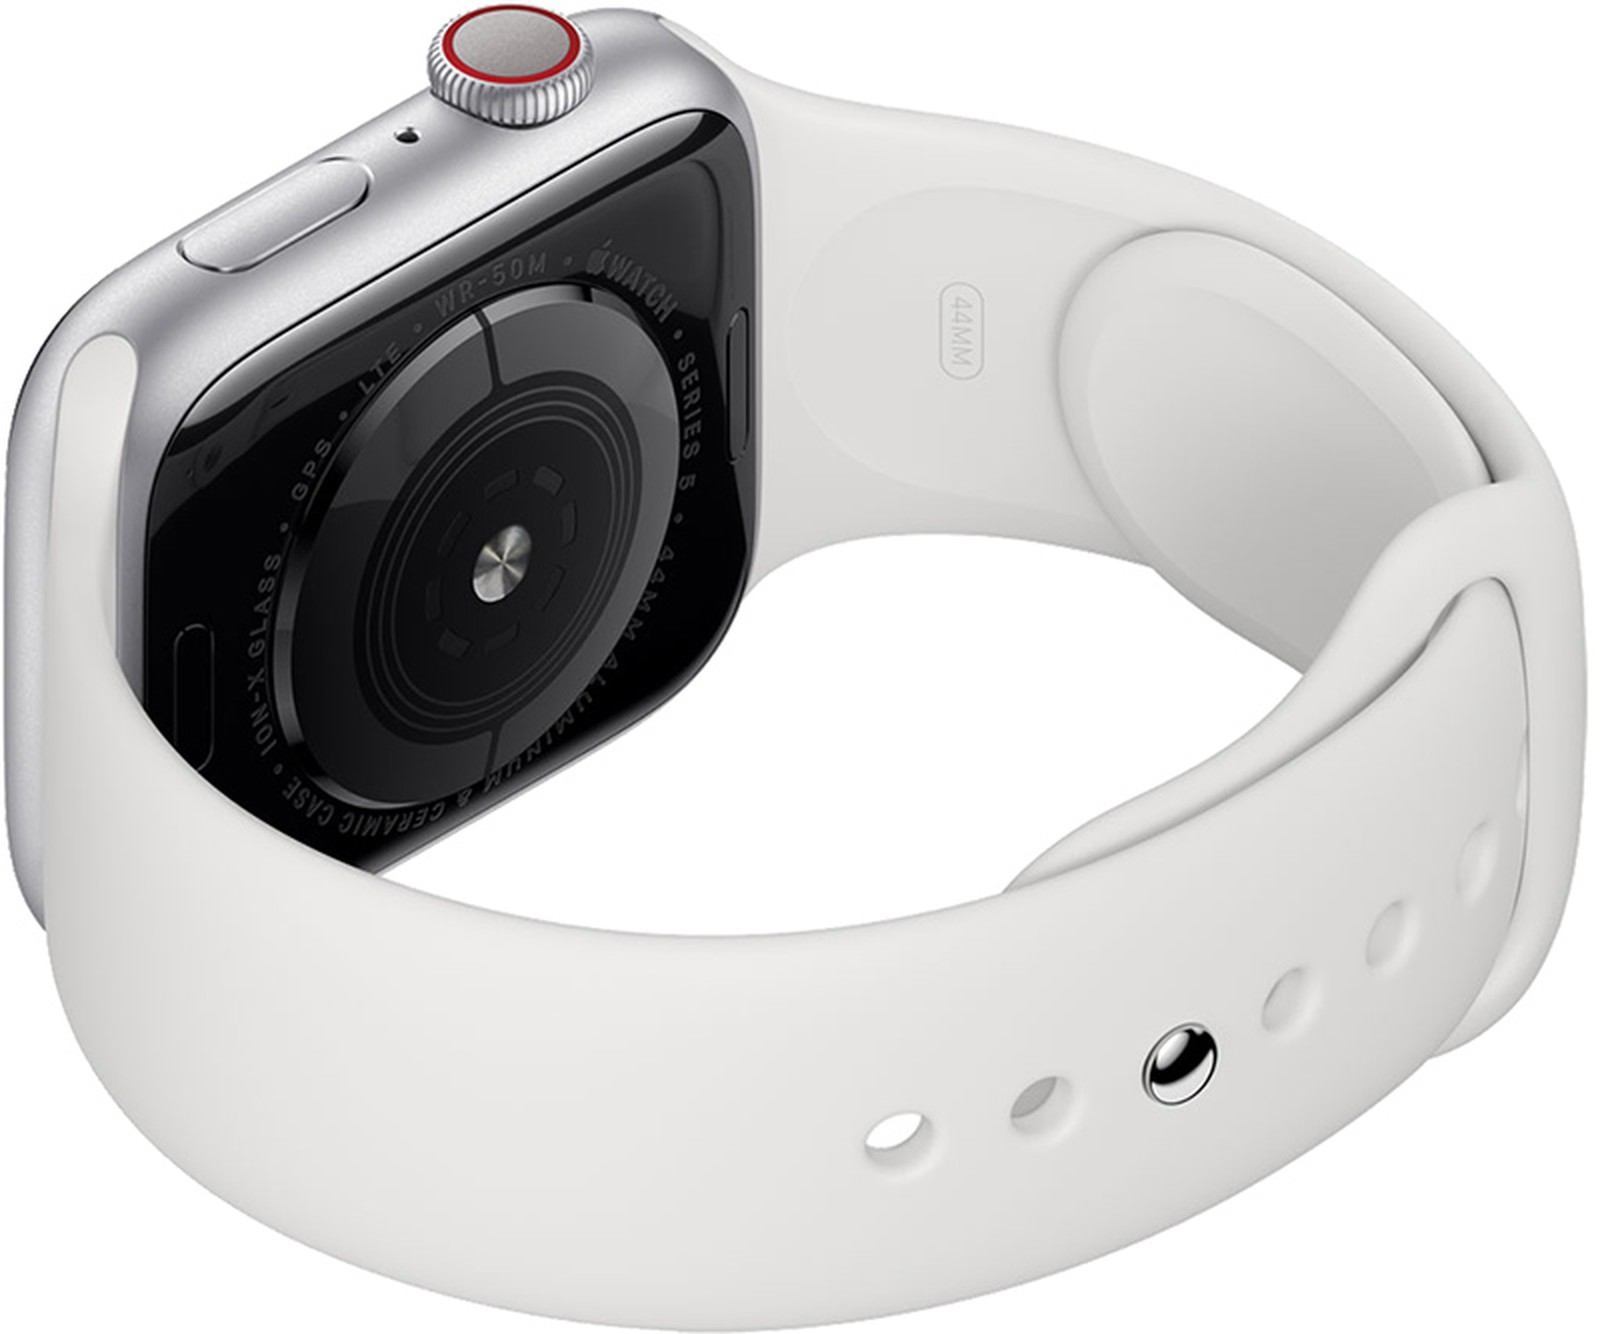 ｢Apple Watch Series 6｣は血中酸素飽和度測定機能を搭載か